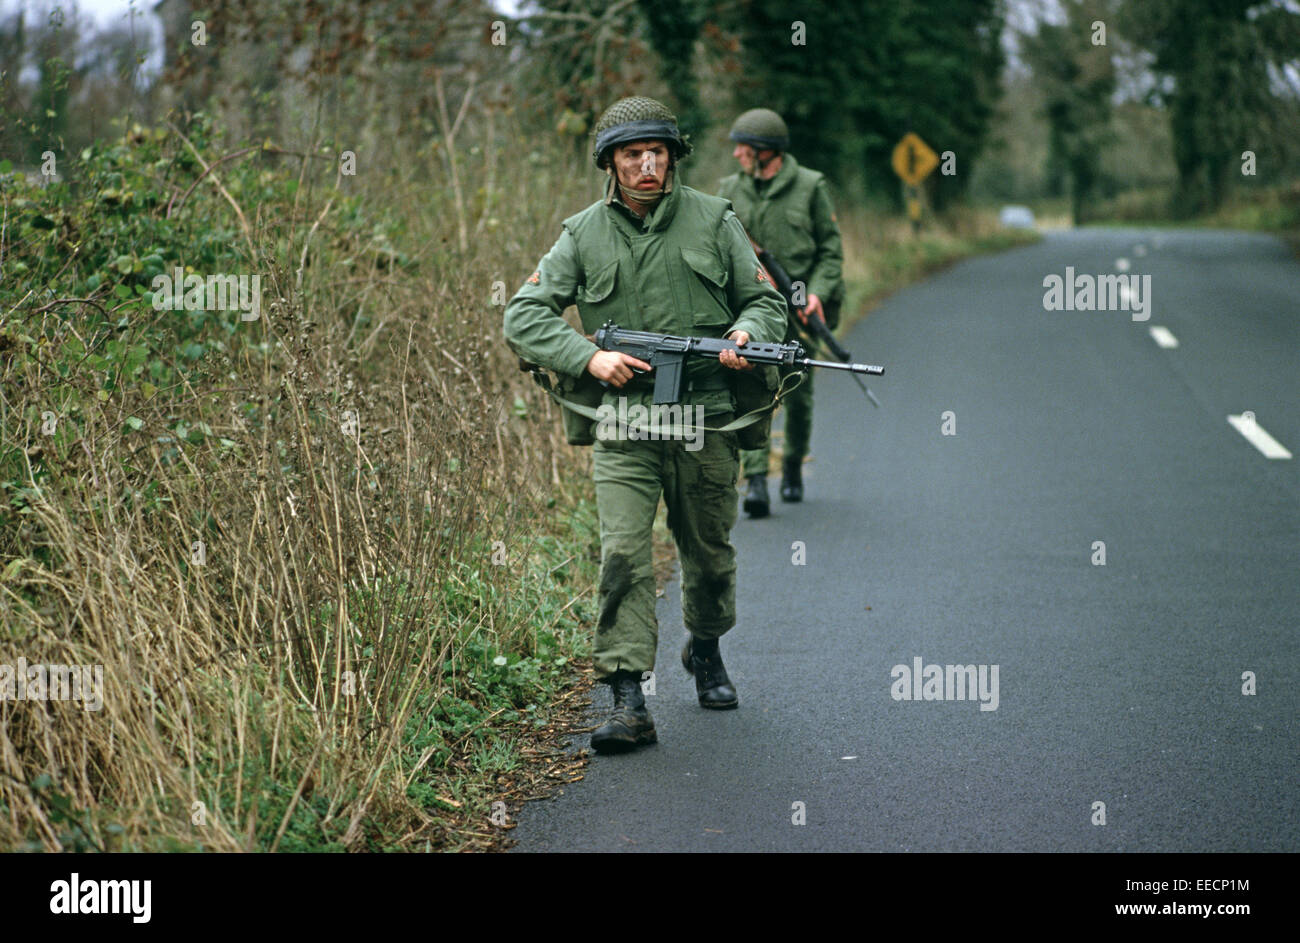 republic-of-ireland-county-donegal-november-1985-irish-army-on-the-EECP1M.jpg